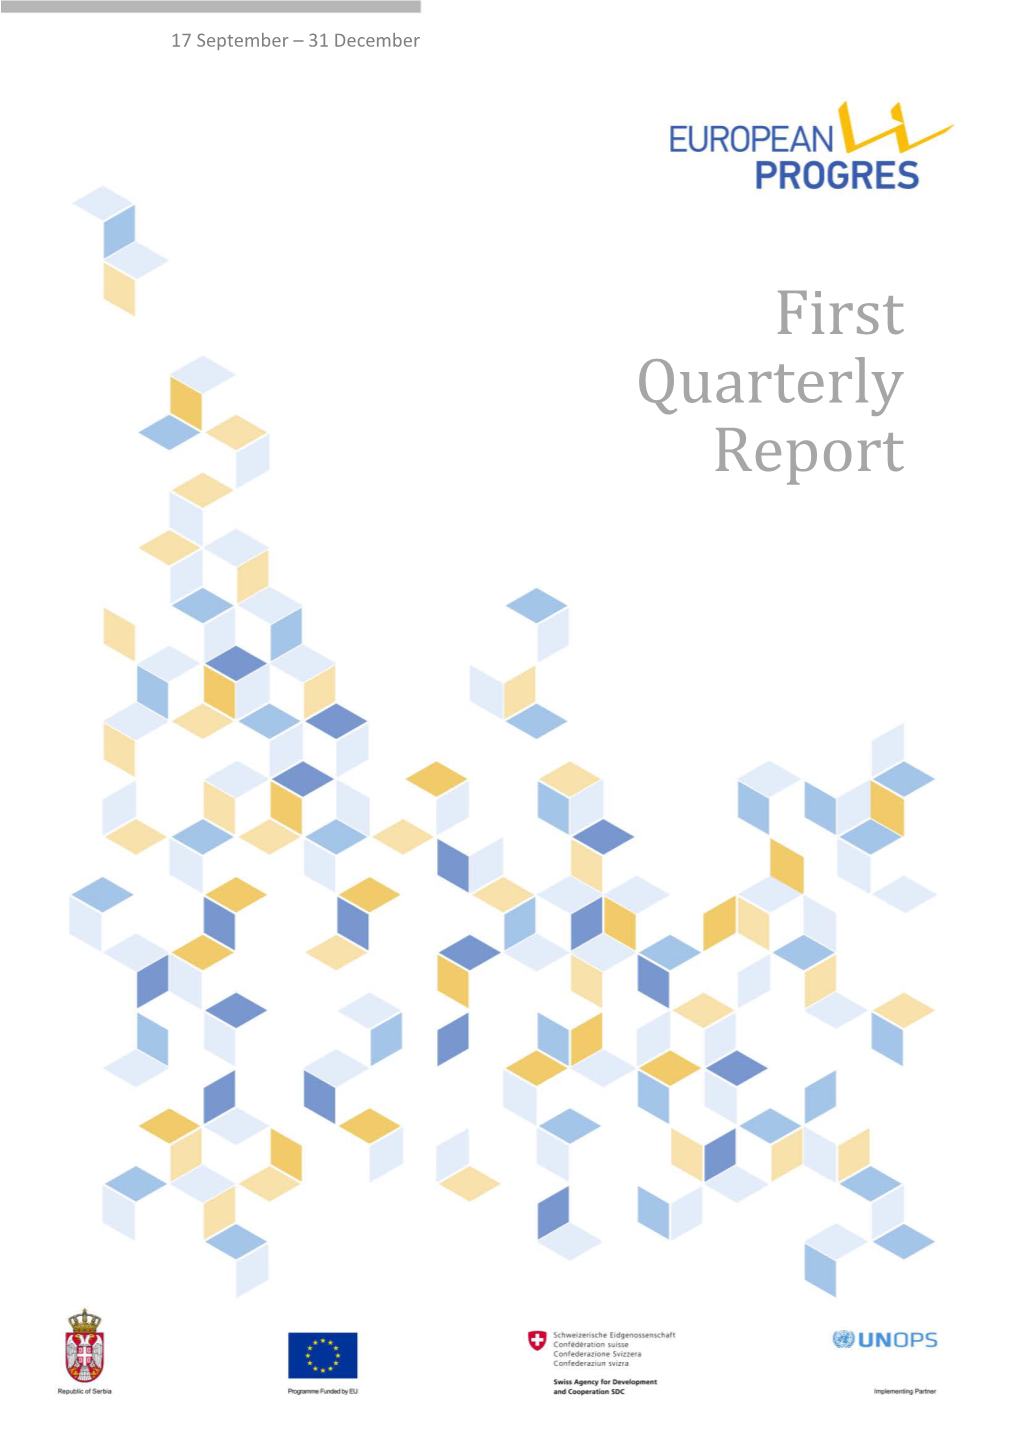 European PROGRES First Quarterly Report 17 September